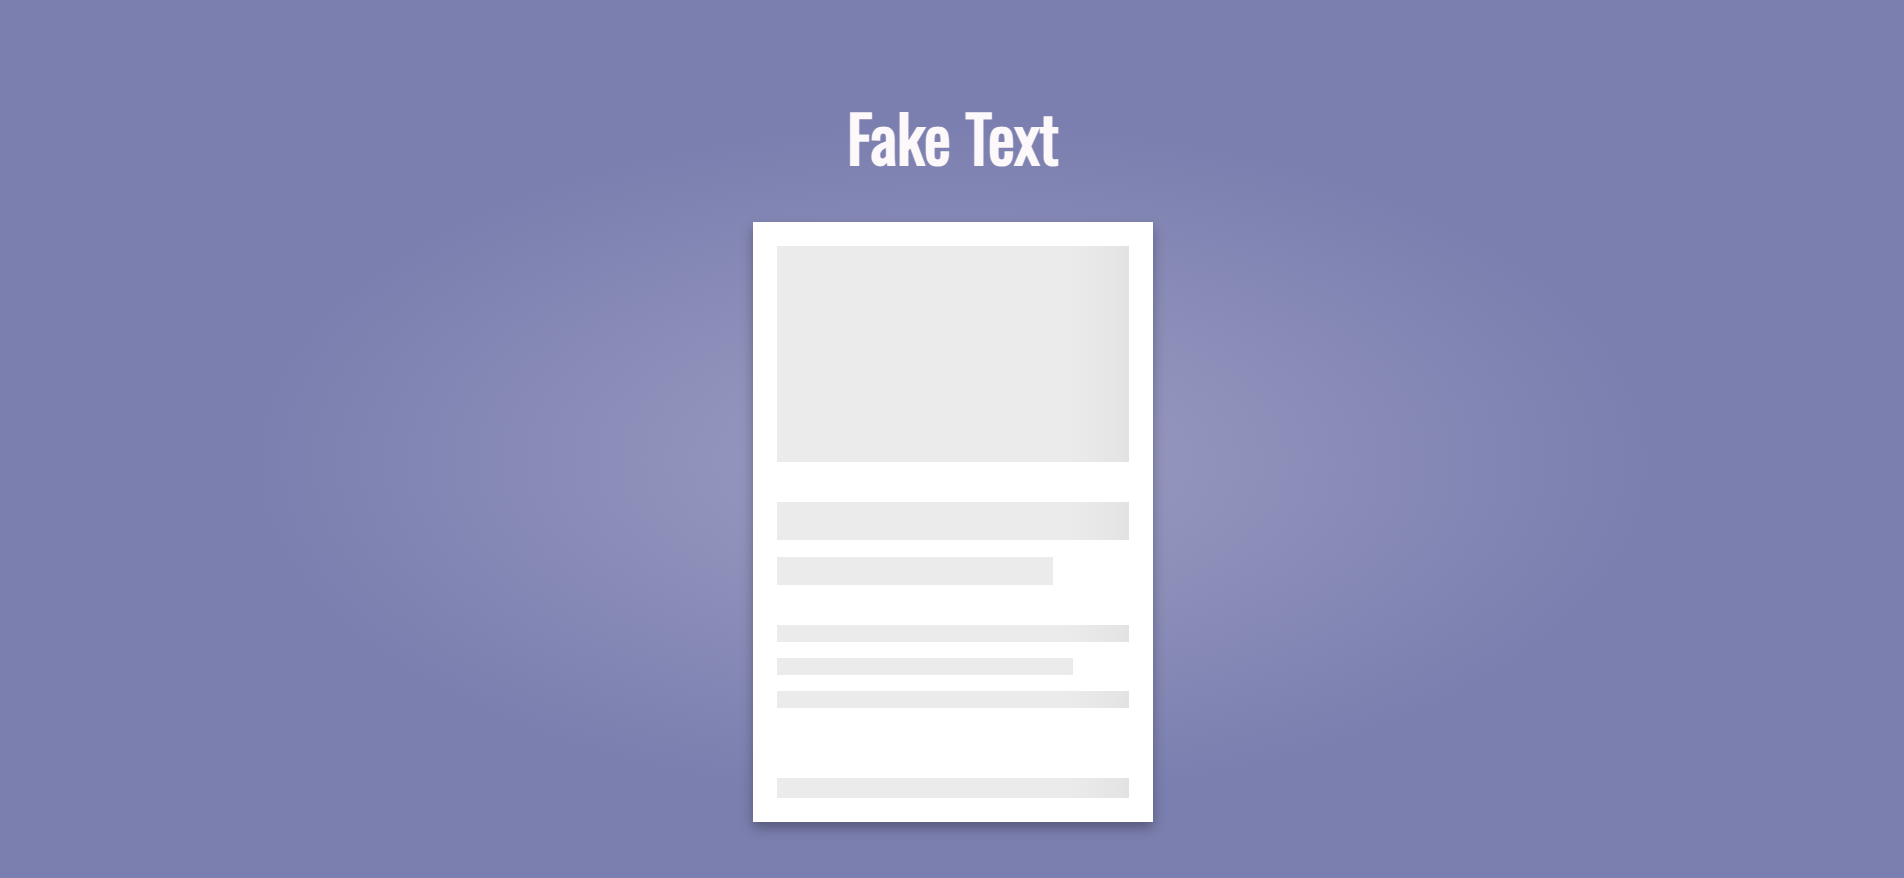 Fake text